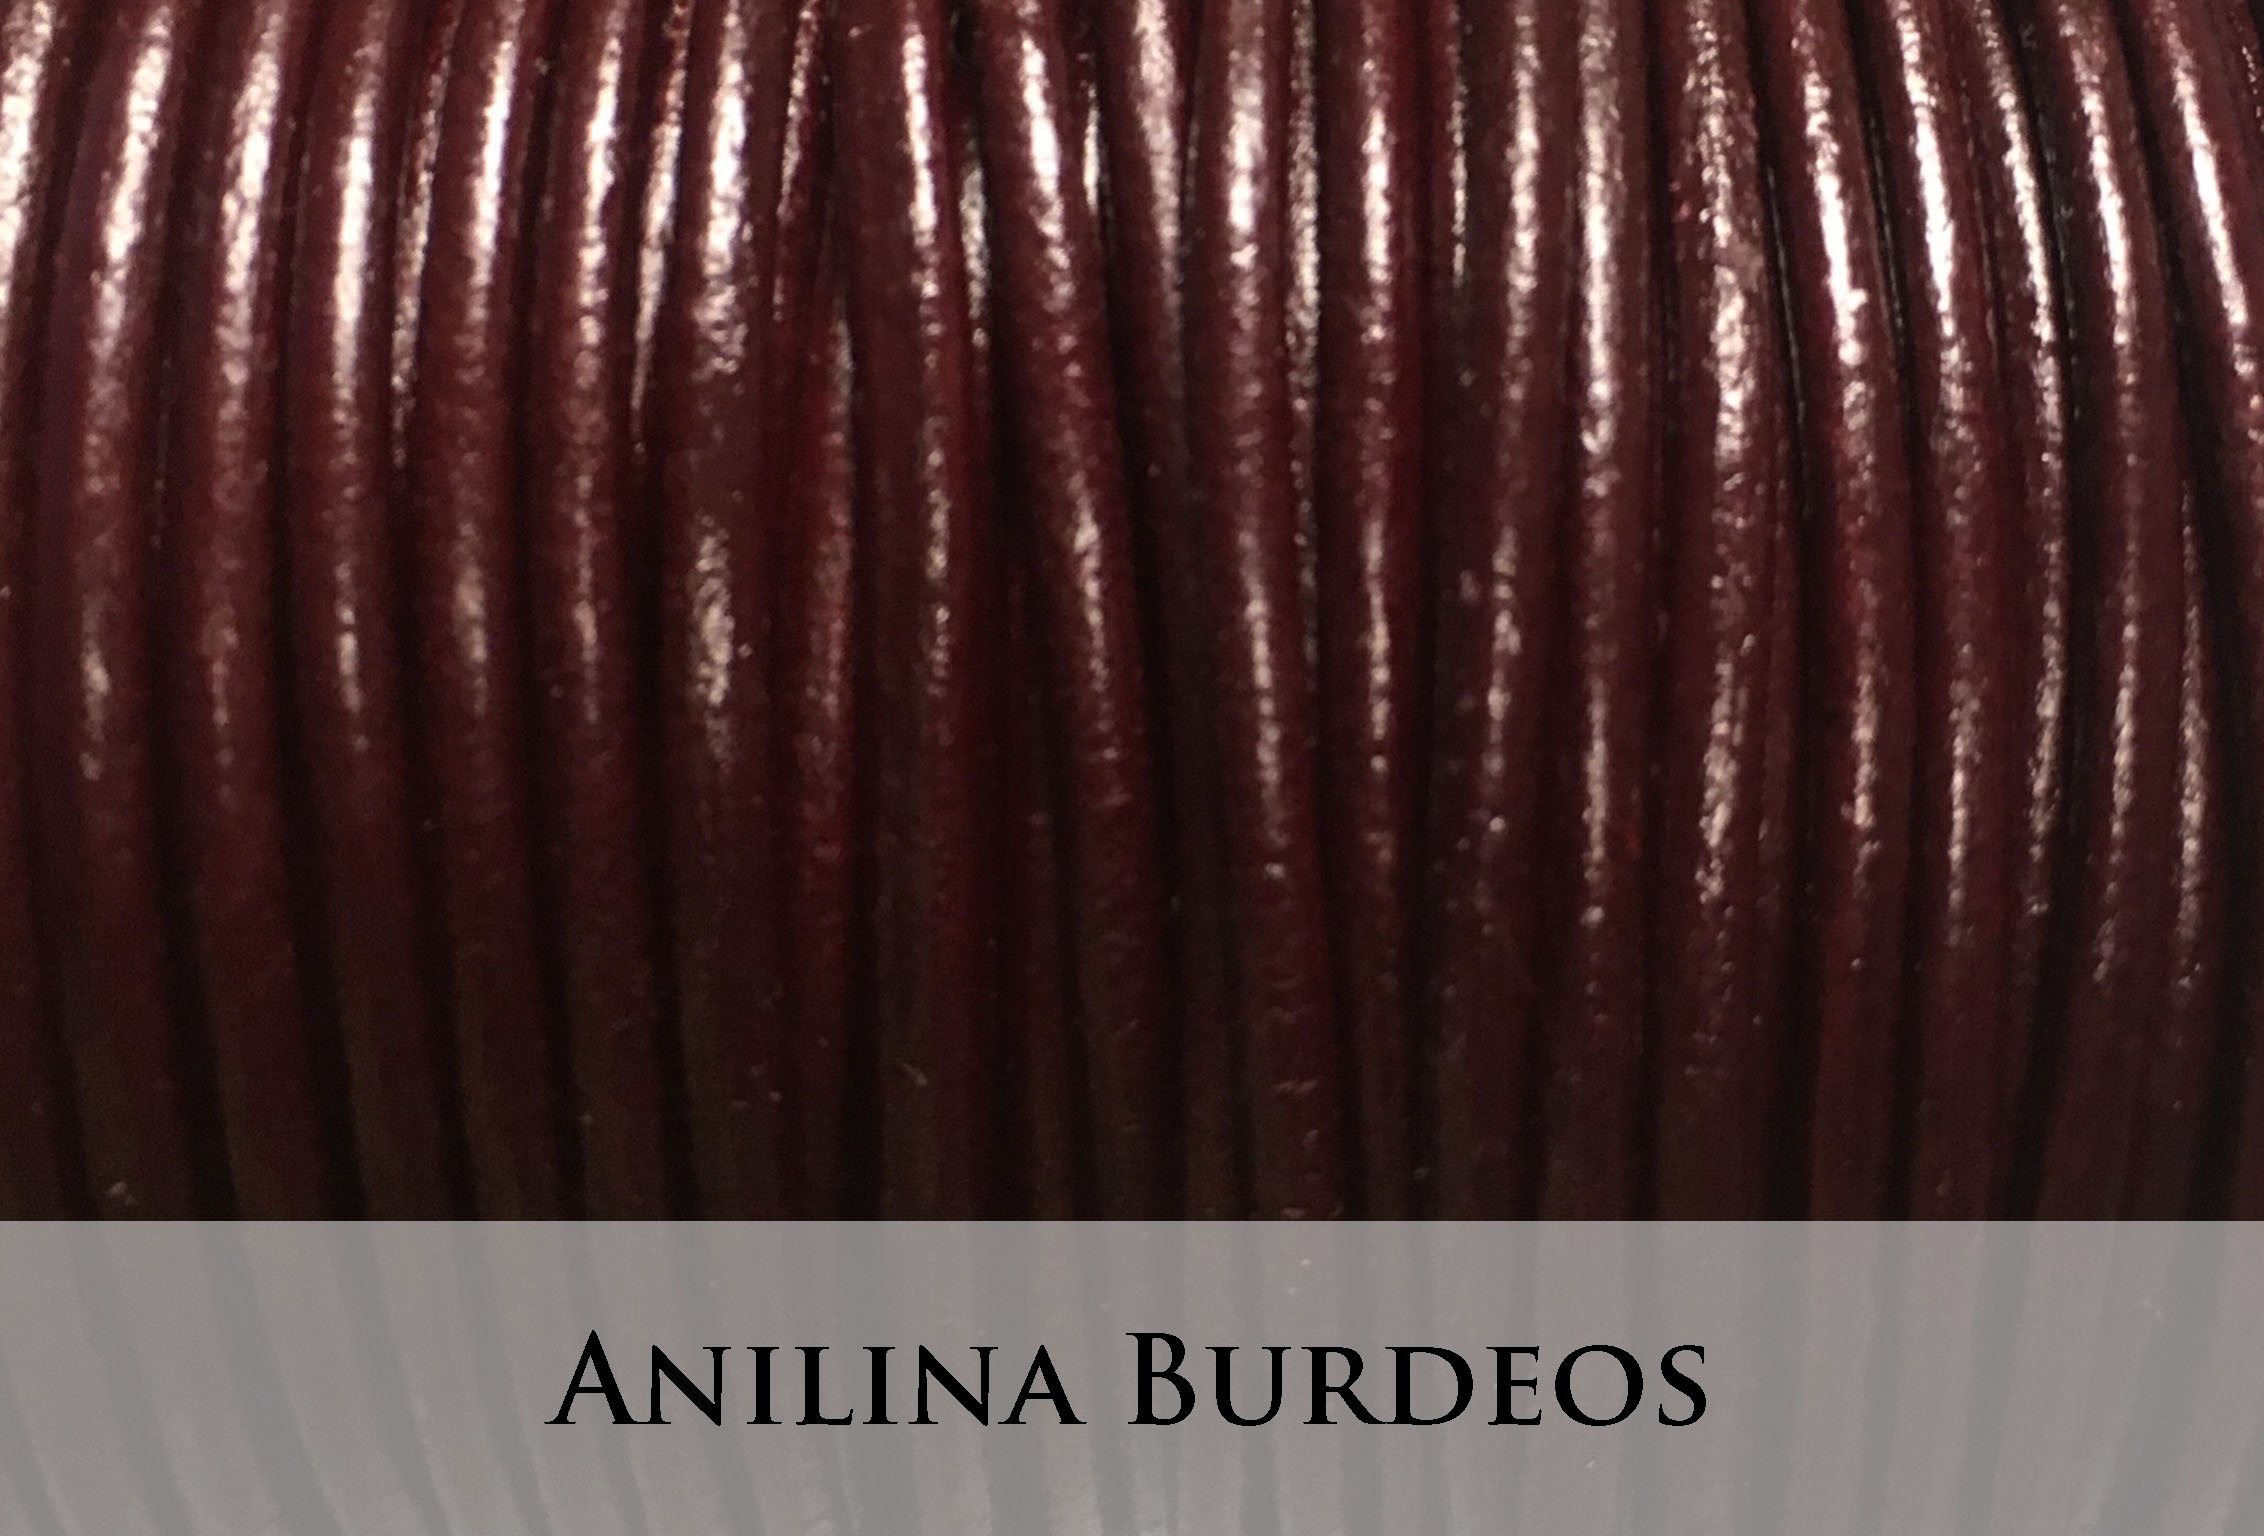 Anilina Burdeos